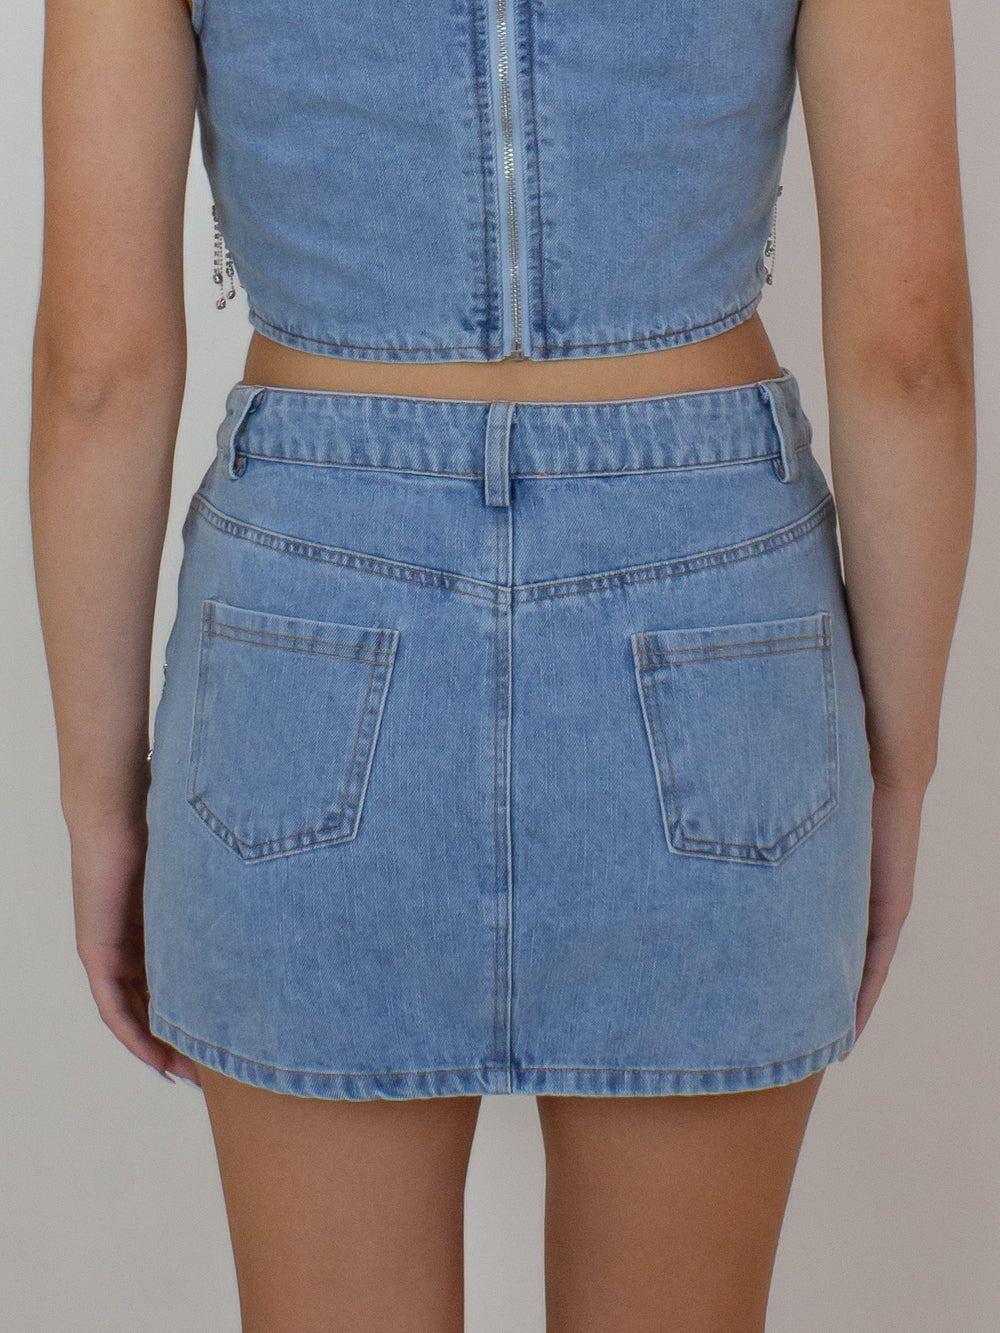 Denim mini skirt with rhinestone fringe details 